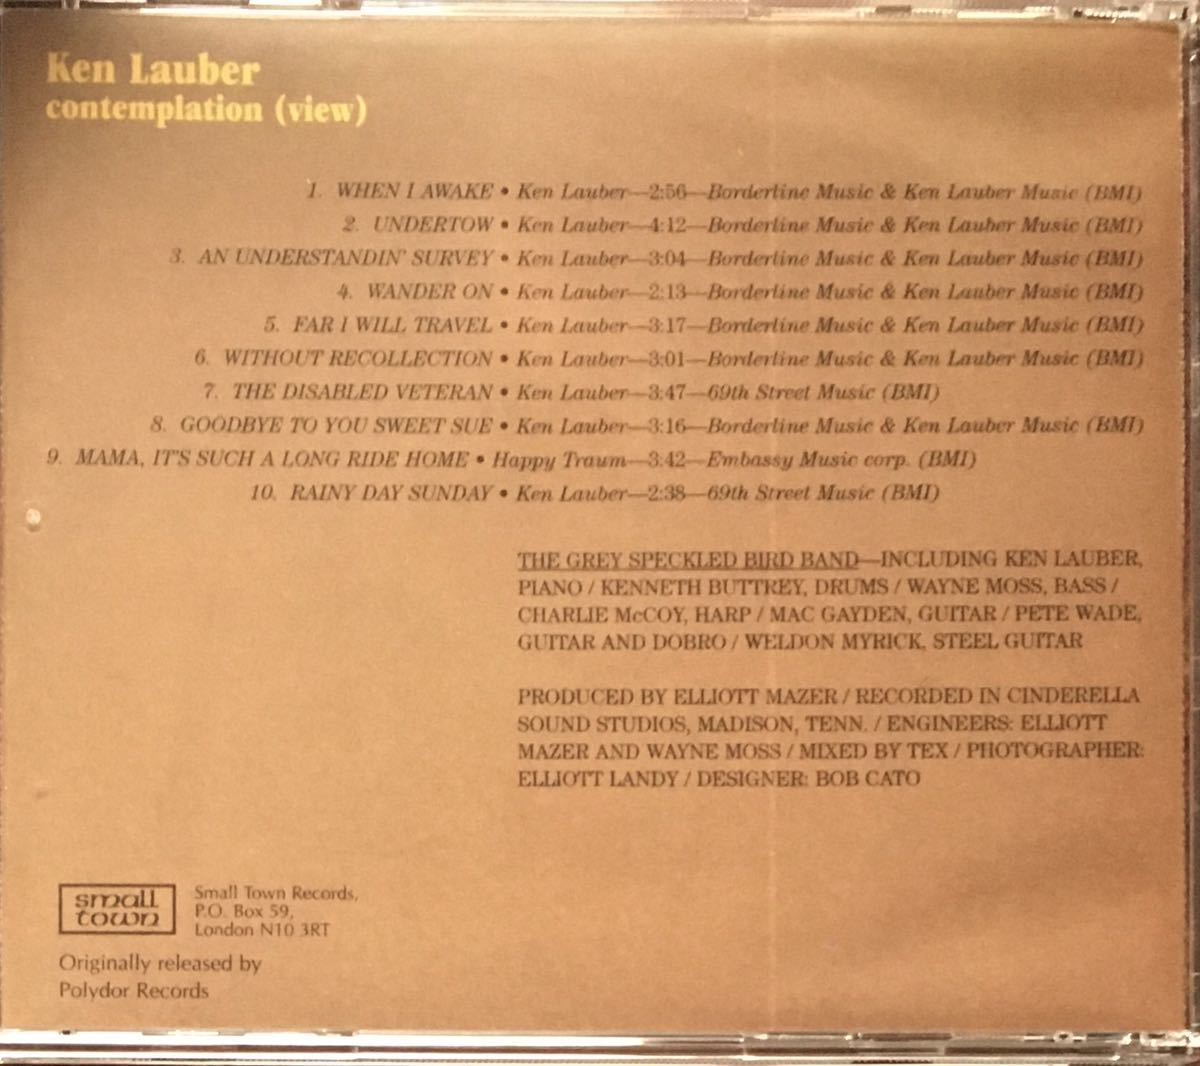 Ken Lauber [contemplation(view]69年傑作！/カントリーロック/スワンプ/シンガーソングライター/名盤探検隊/AREA CODE 615関連_画像2